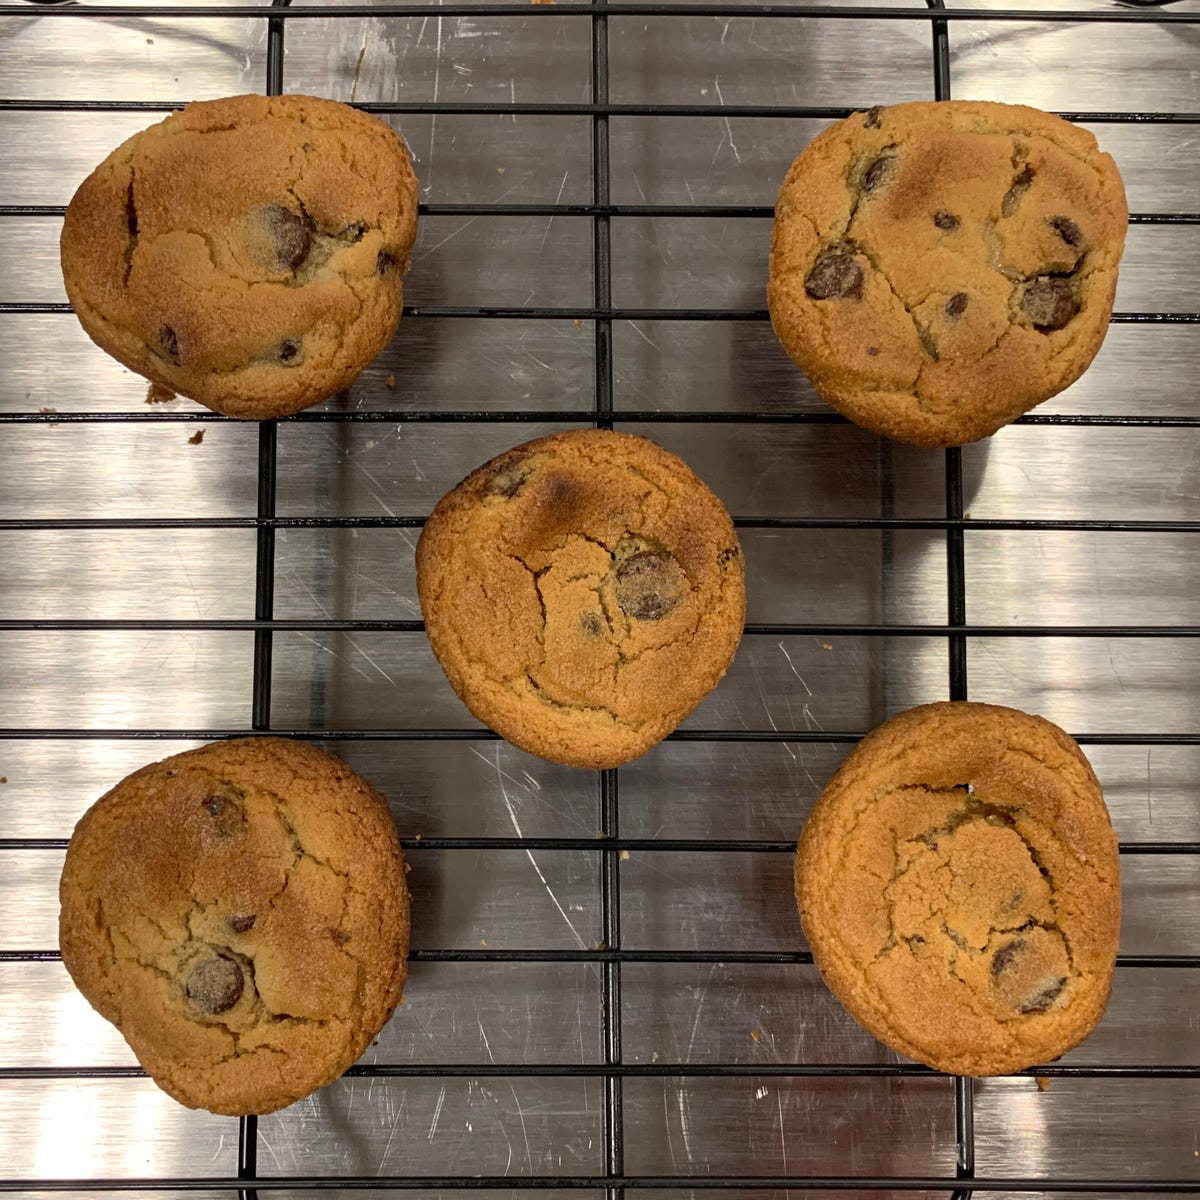 toshiba-toaster-oven-cookies-8-minutes